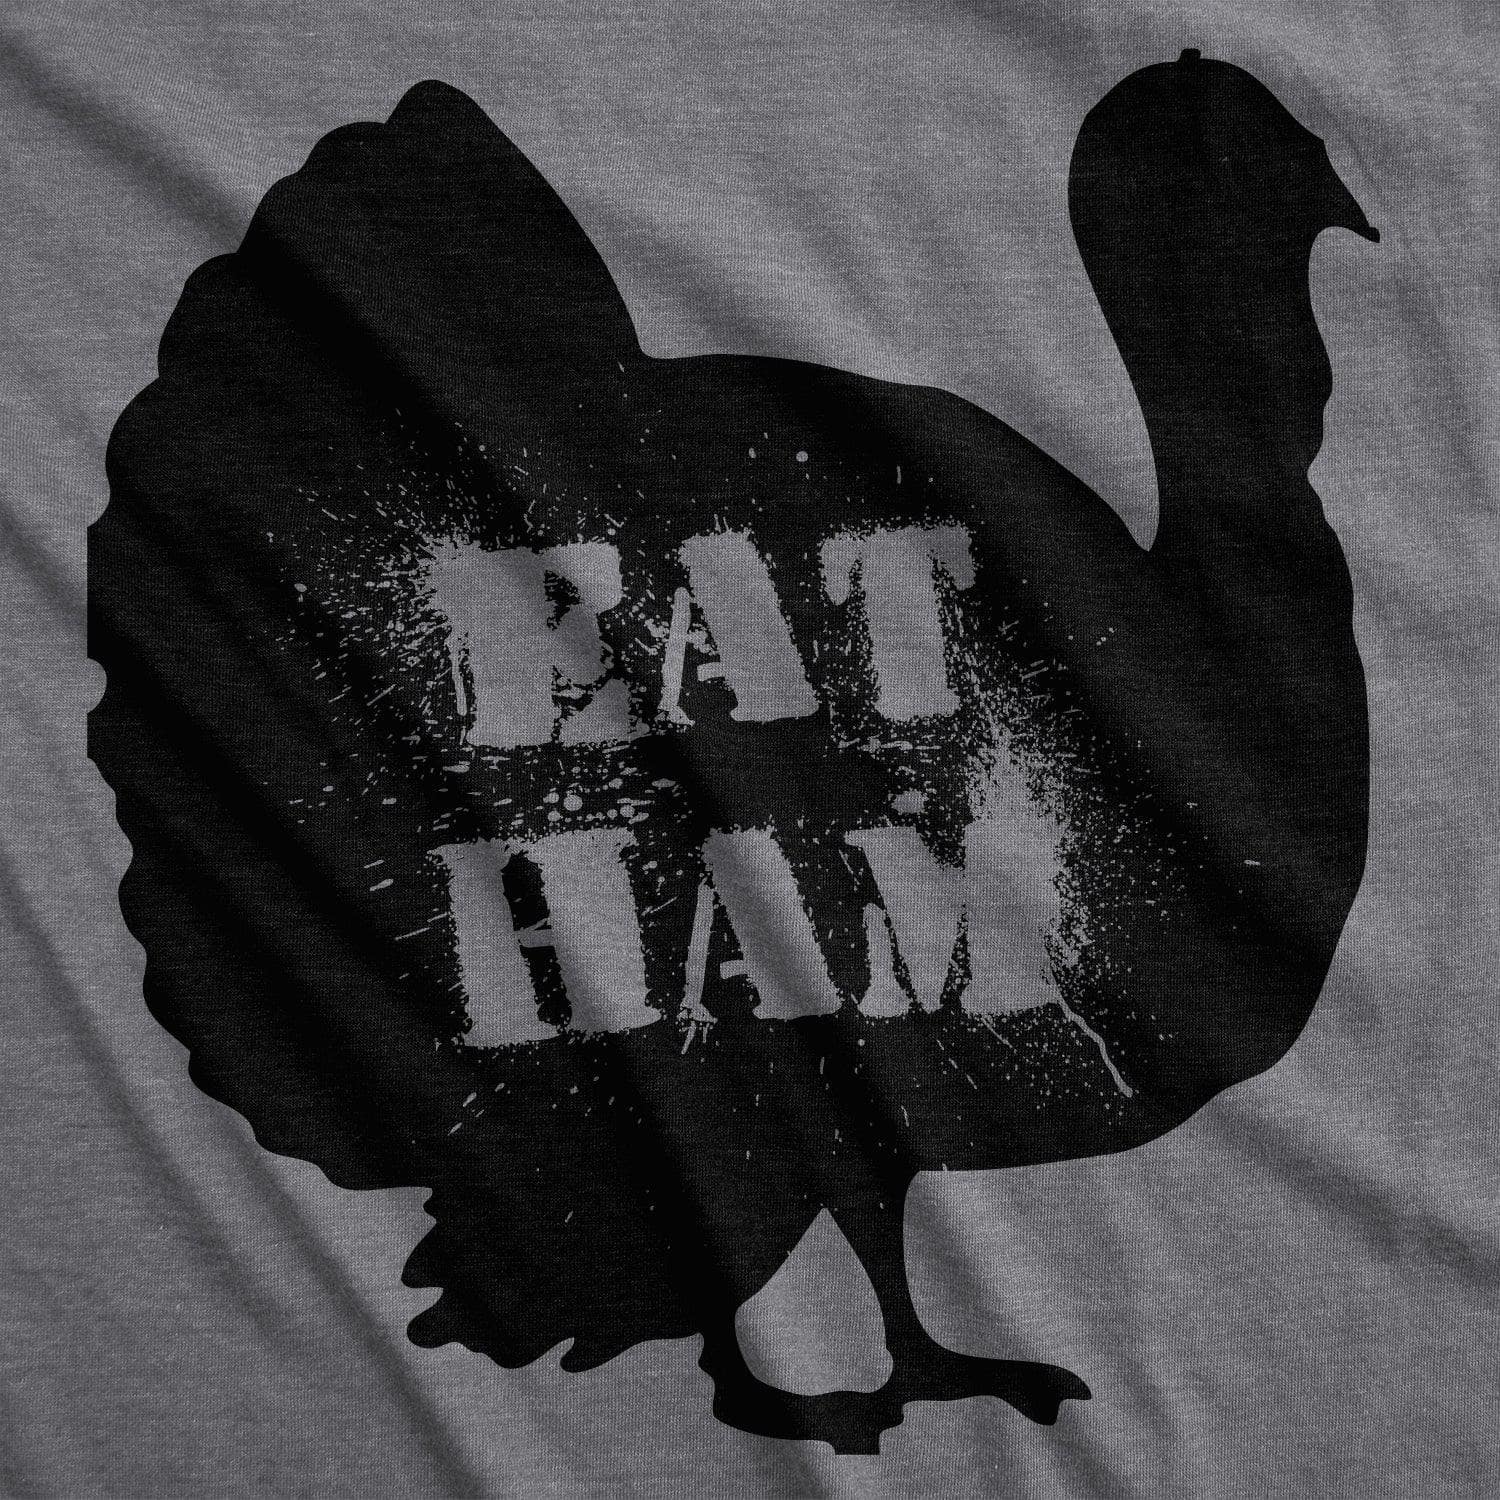 Eat Ham Men's Tshirt  -  Crazy Dog T-Shirts